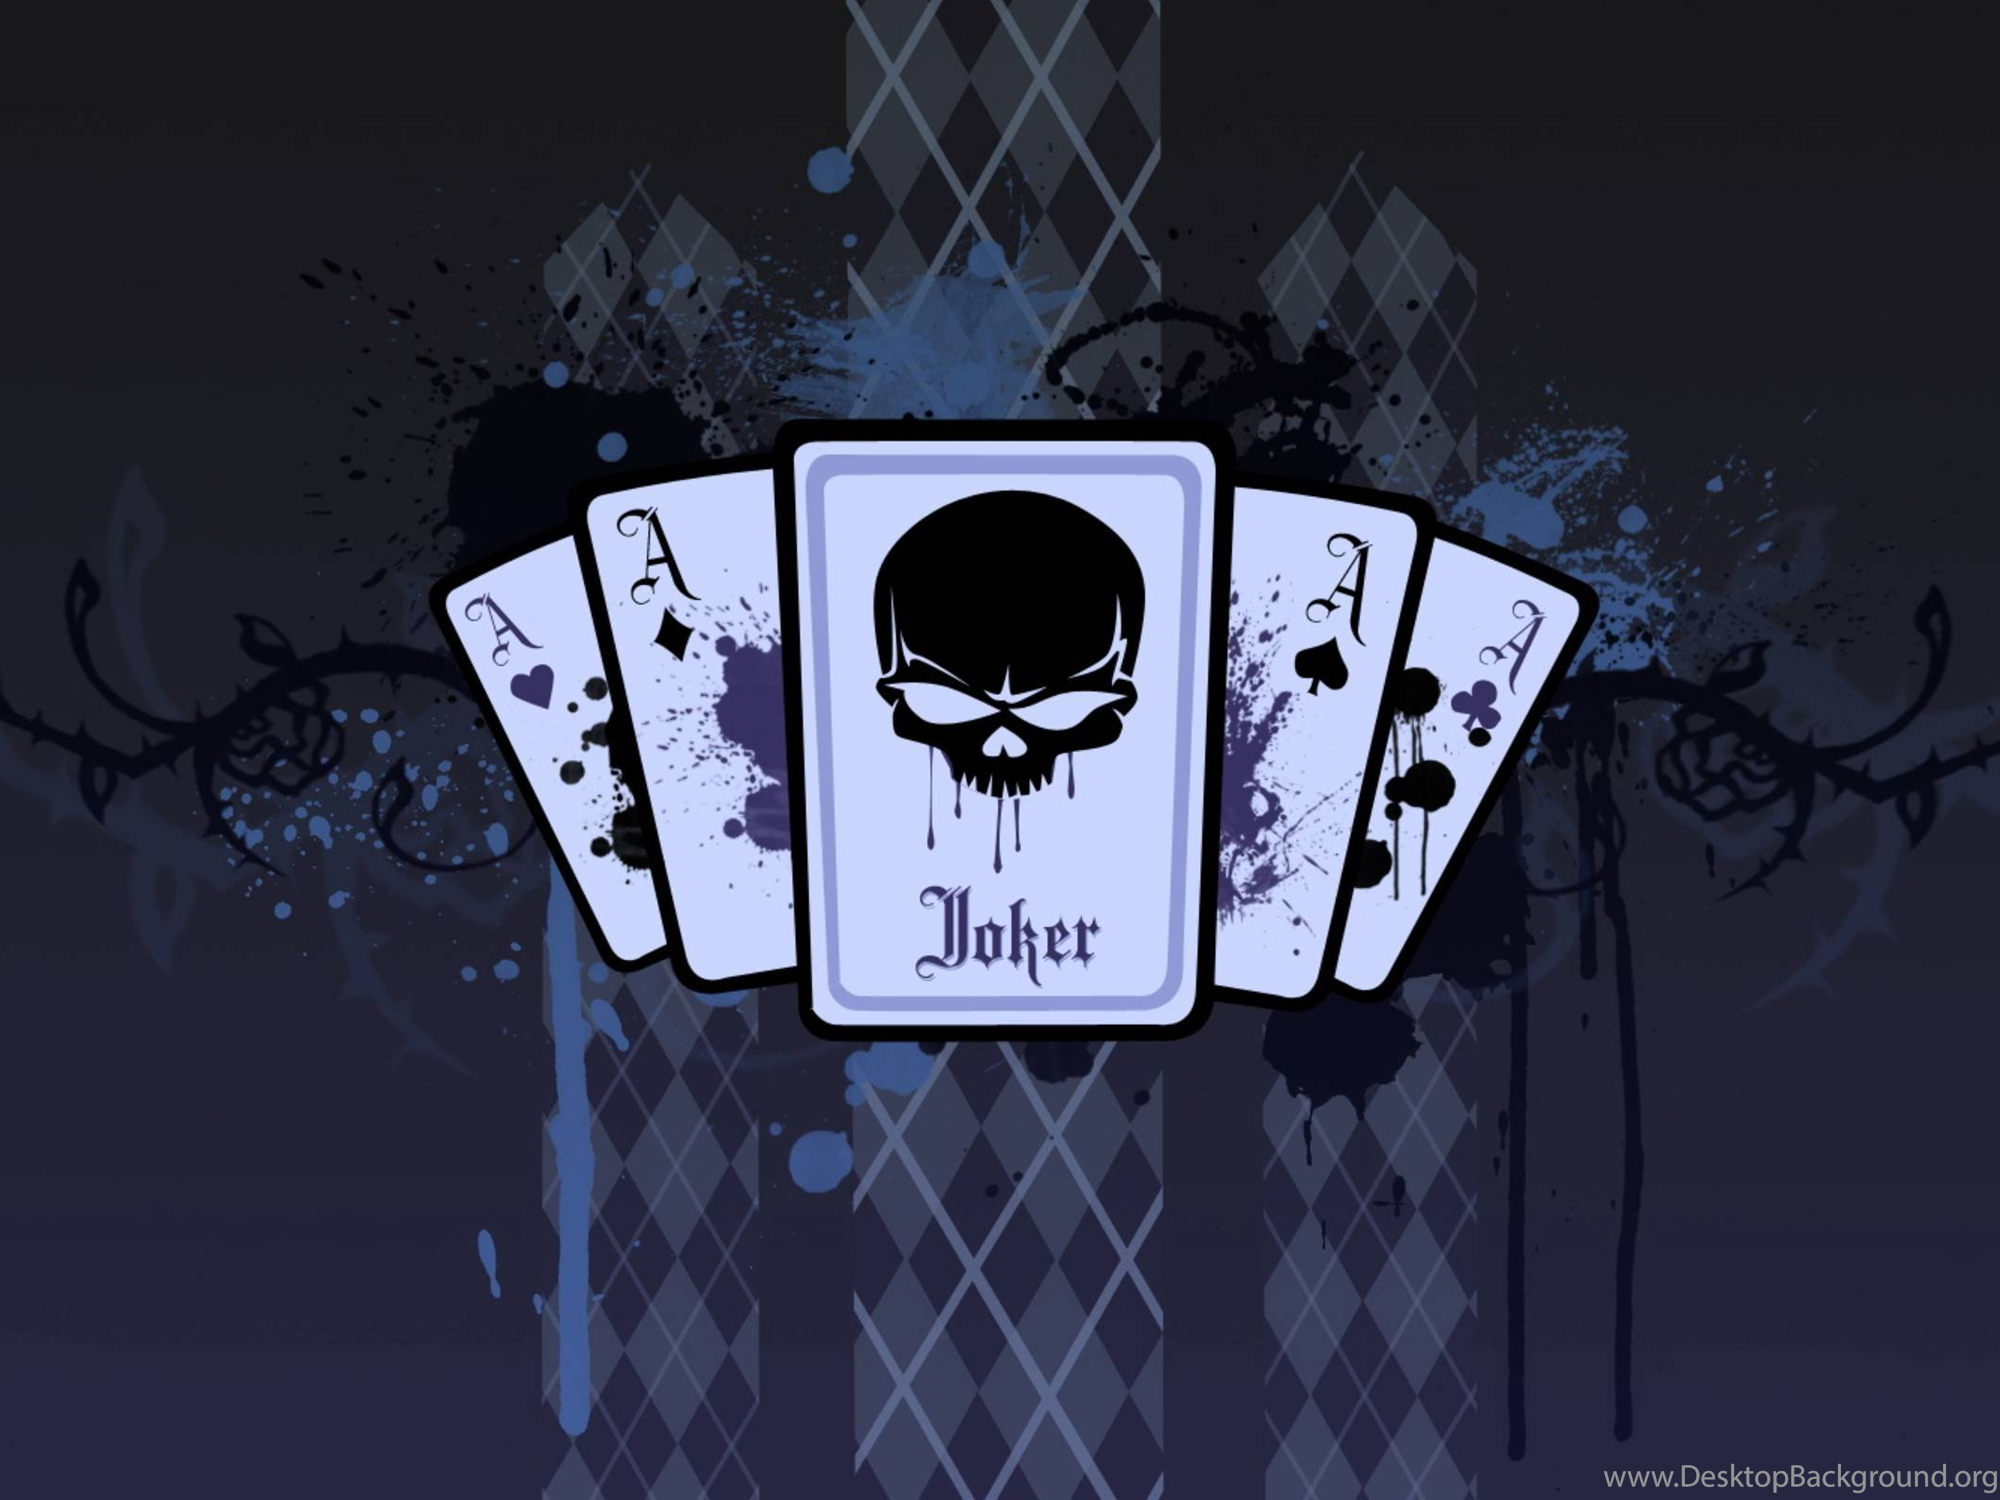 Картинки на заставку телефона для пацана. Джокер карта. Покер картинки. Покерные карты Джокер. Обои карты игральные.